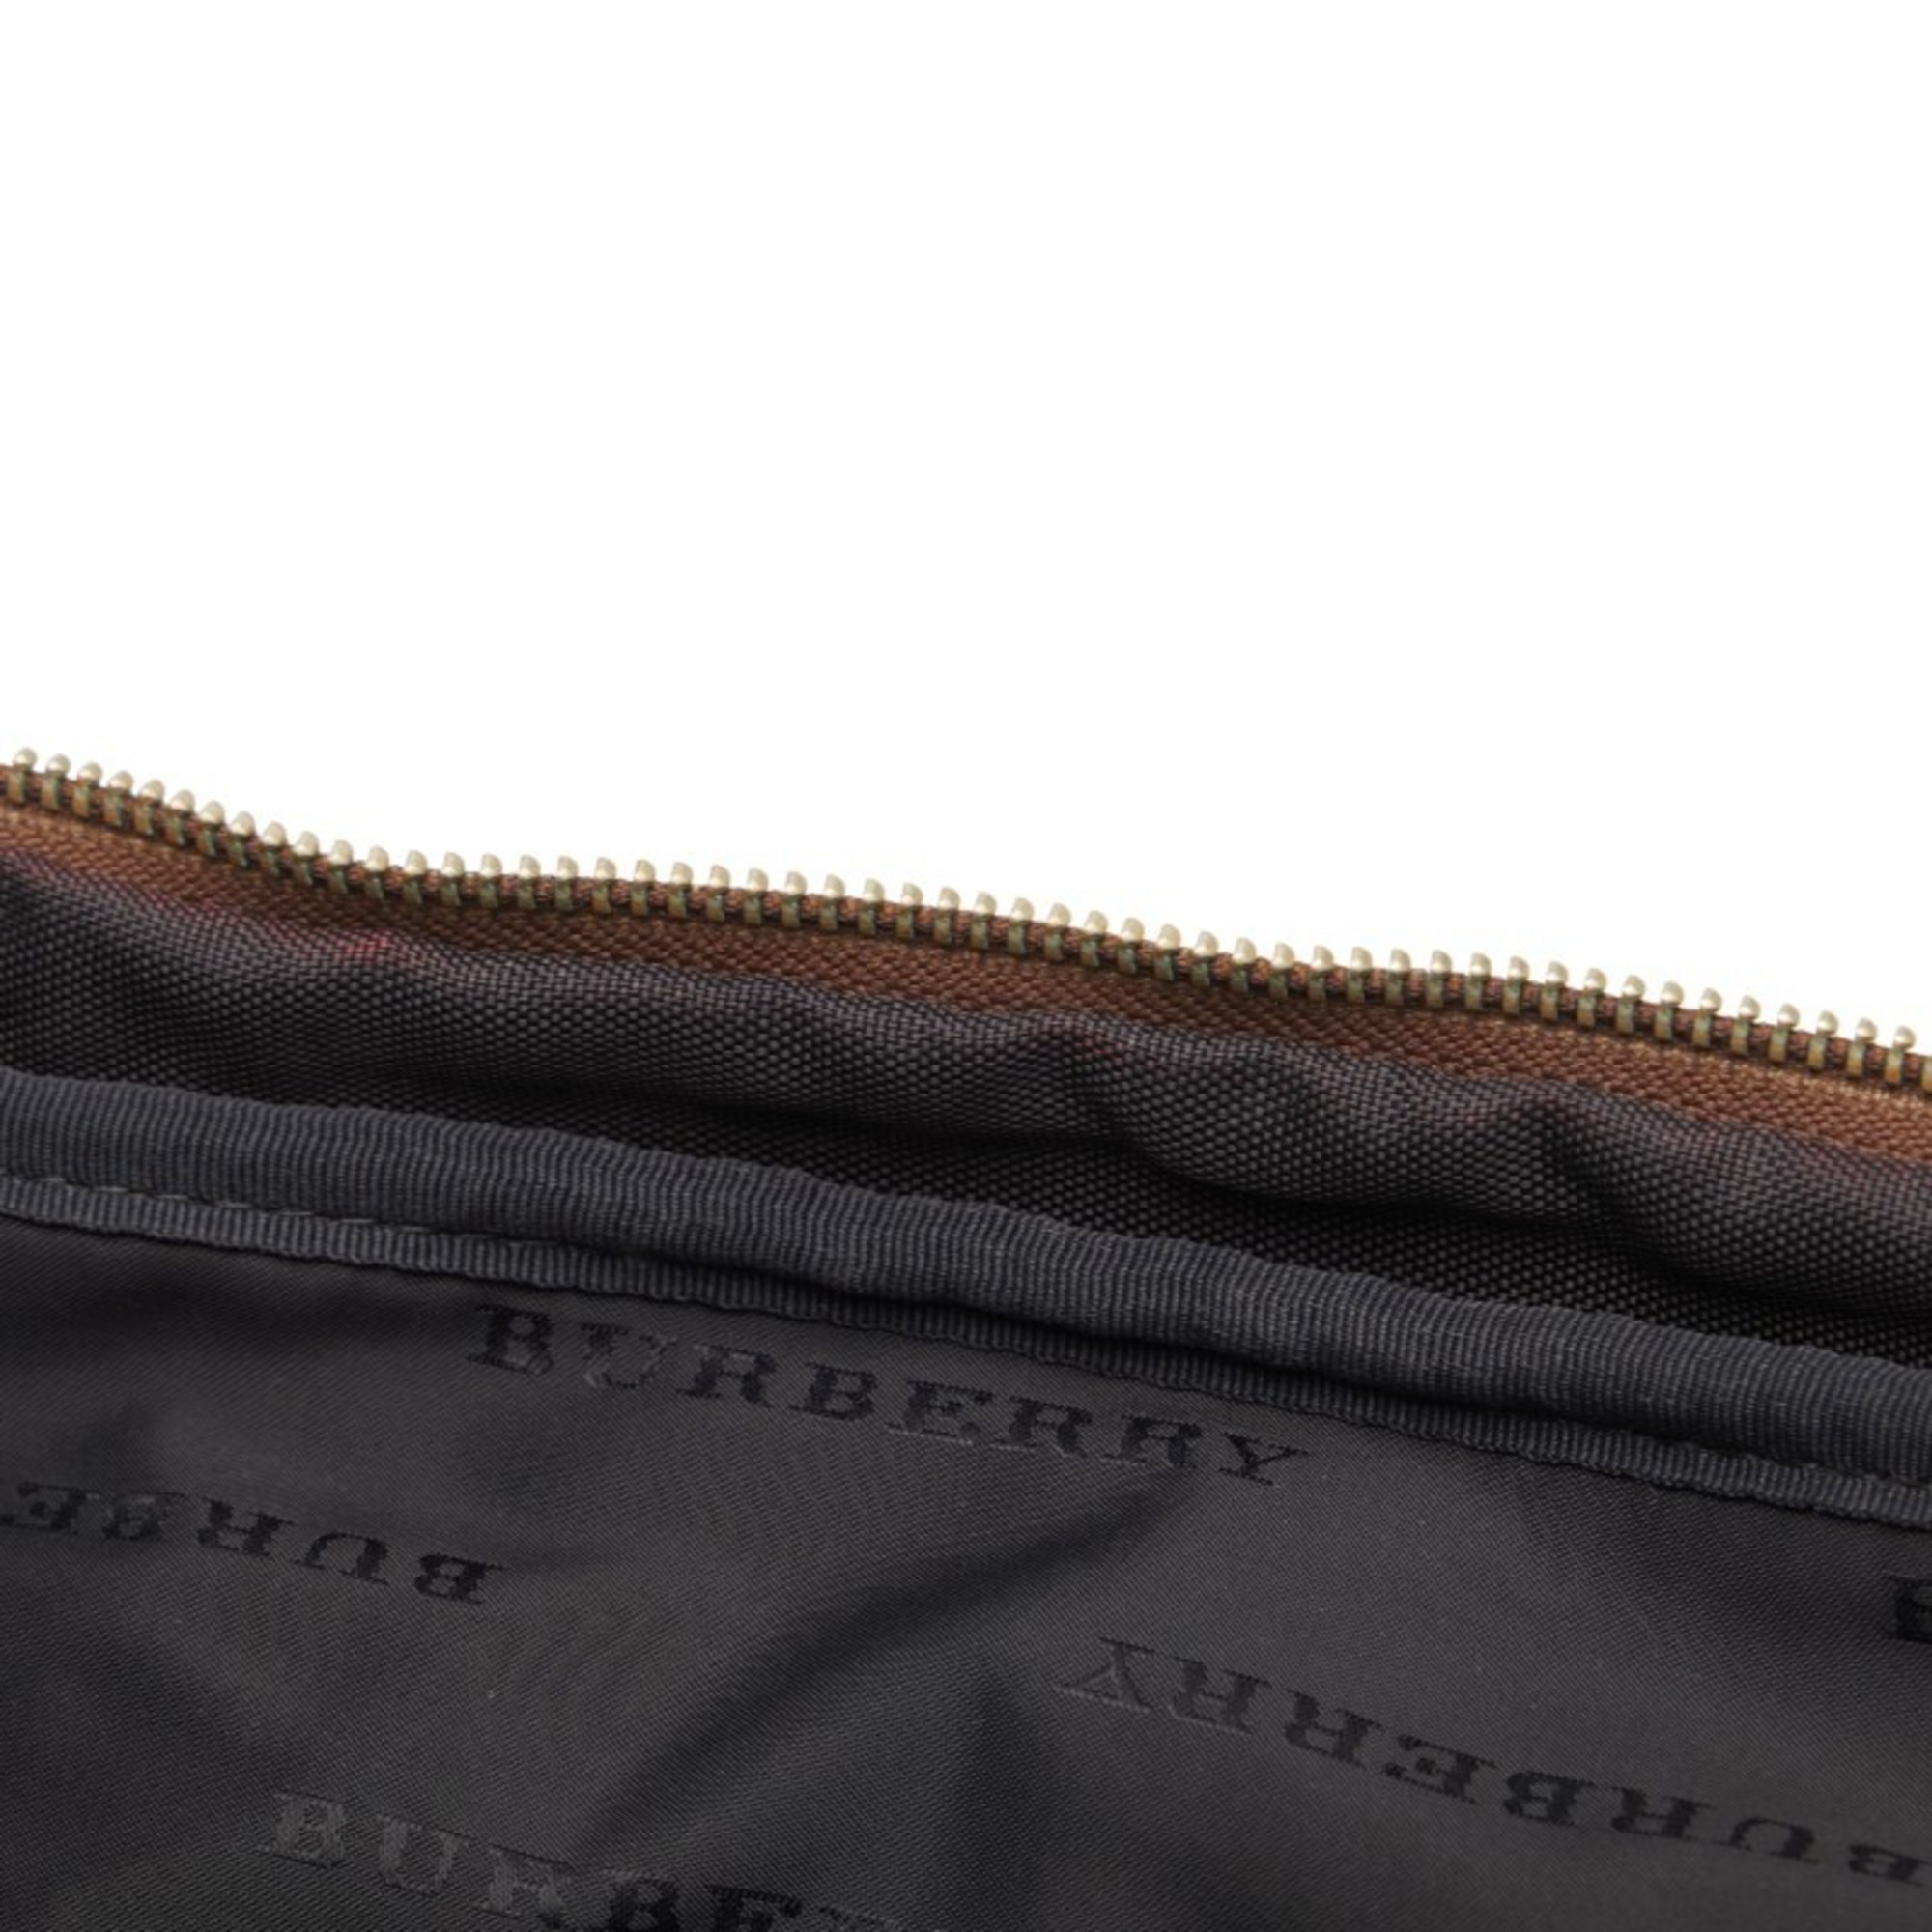 Burberry Nova Check Boston Bag Handbag Beige Brown Canvas Leather Women's BURBERRY